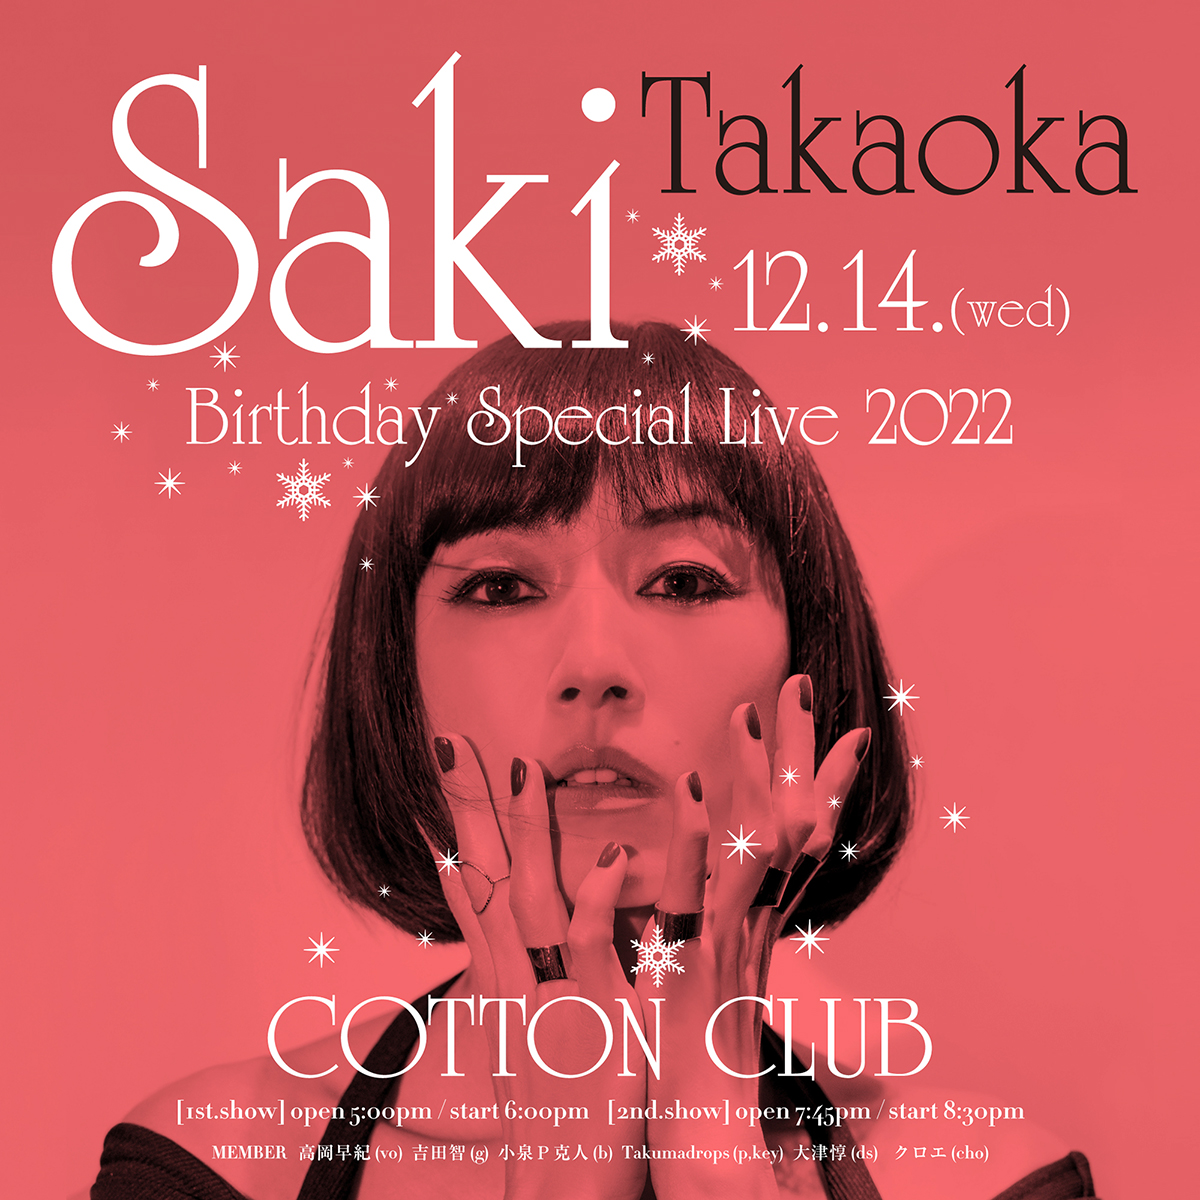 Saki Takaoka Birthday Special Live 2022